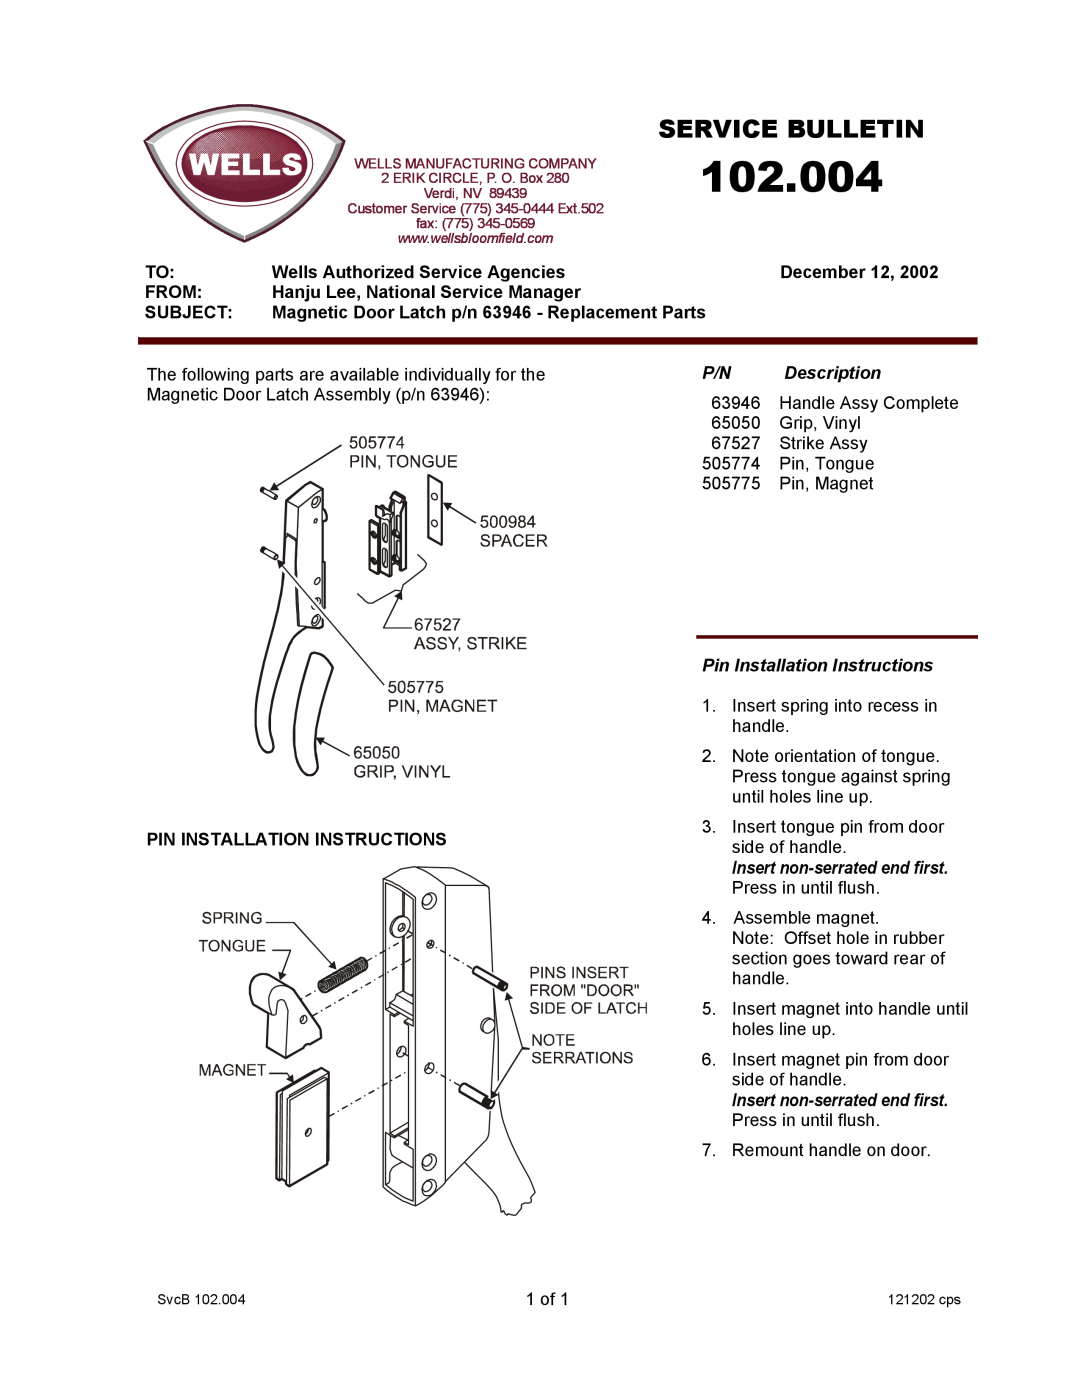 Wells Magnetic Door Latch installation instructions 102.004, Service Bulletin, Wells Authorized Service Agencies, December 